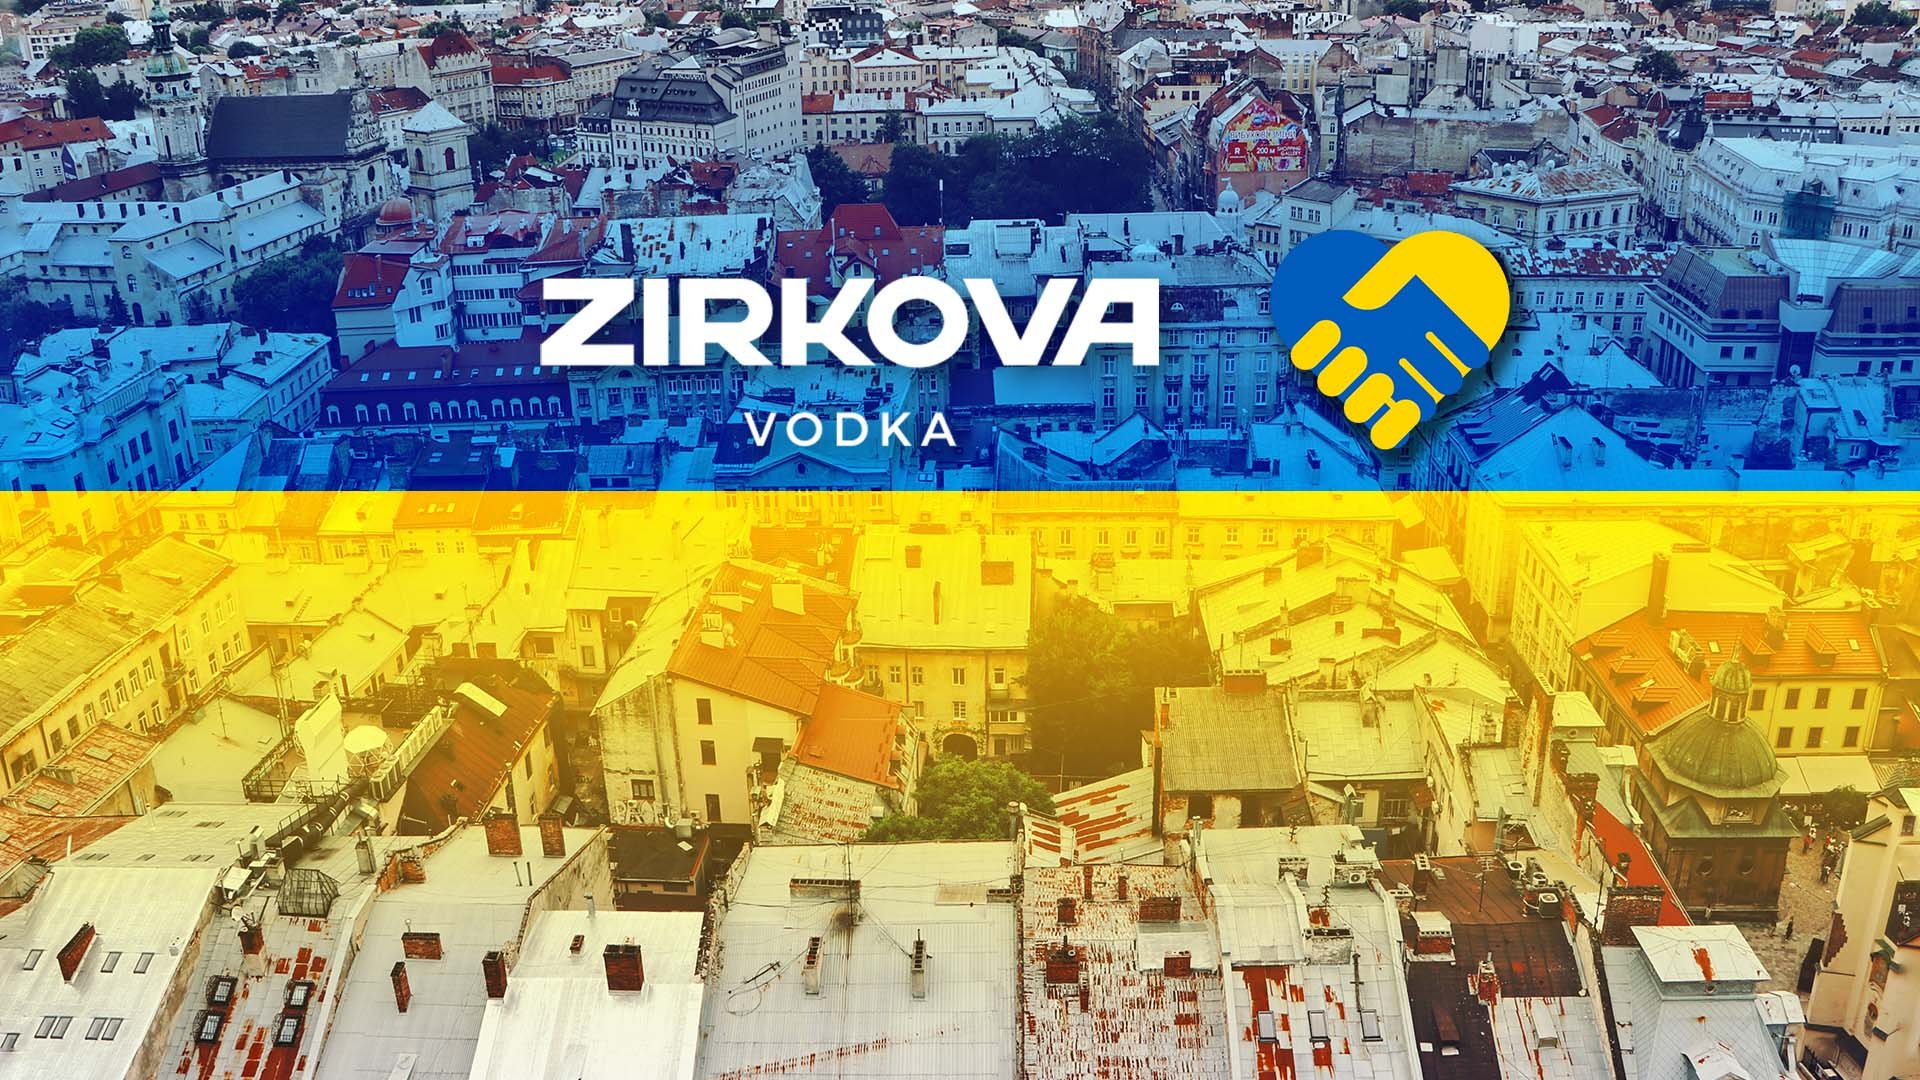 Ukrainian-Canadian Vodka Company ZIRKOVA Pledges 100 Percent of Profits to Ukraine Relief